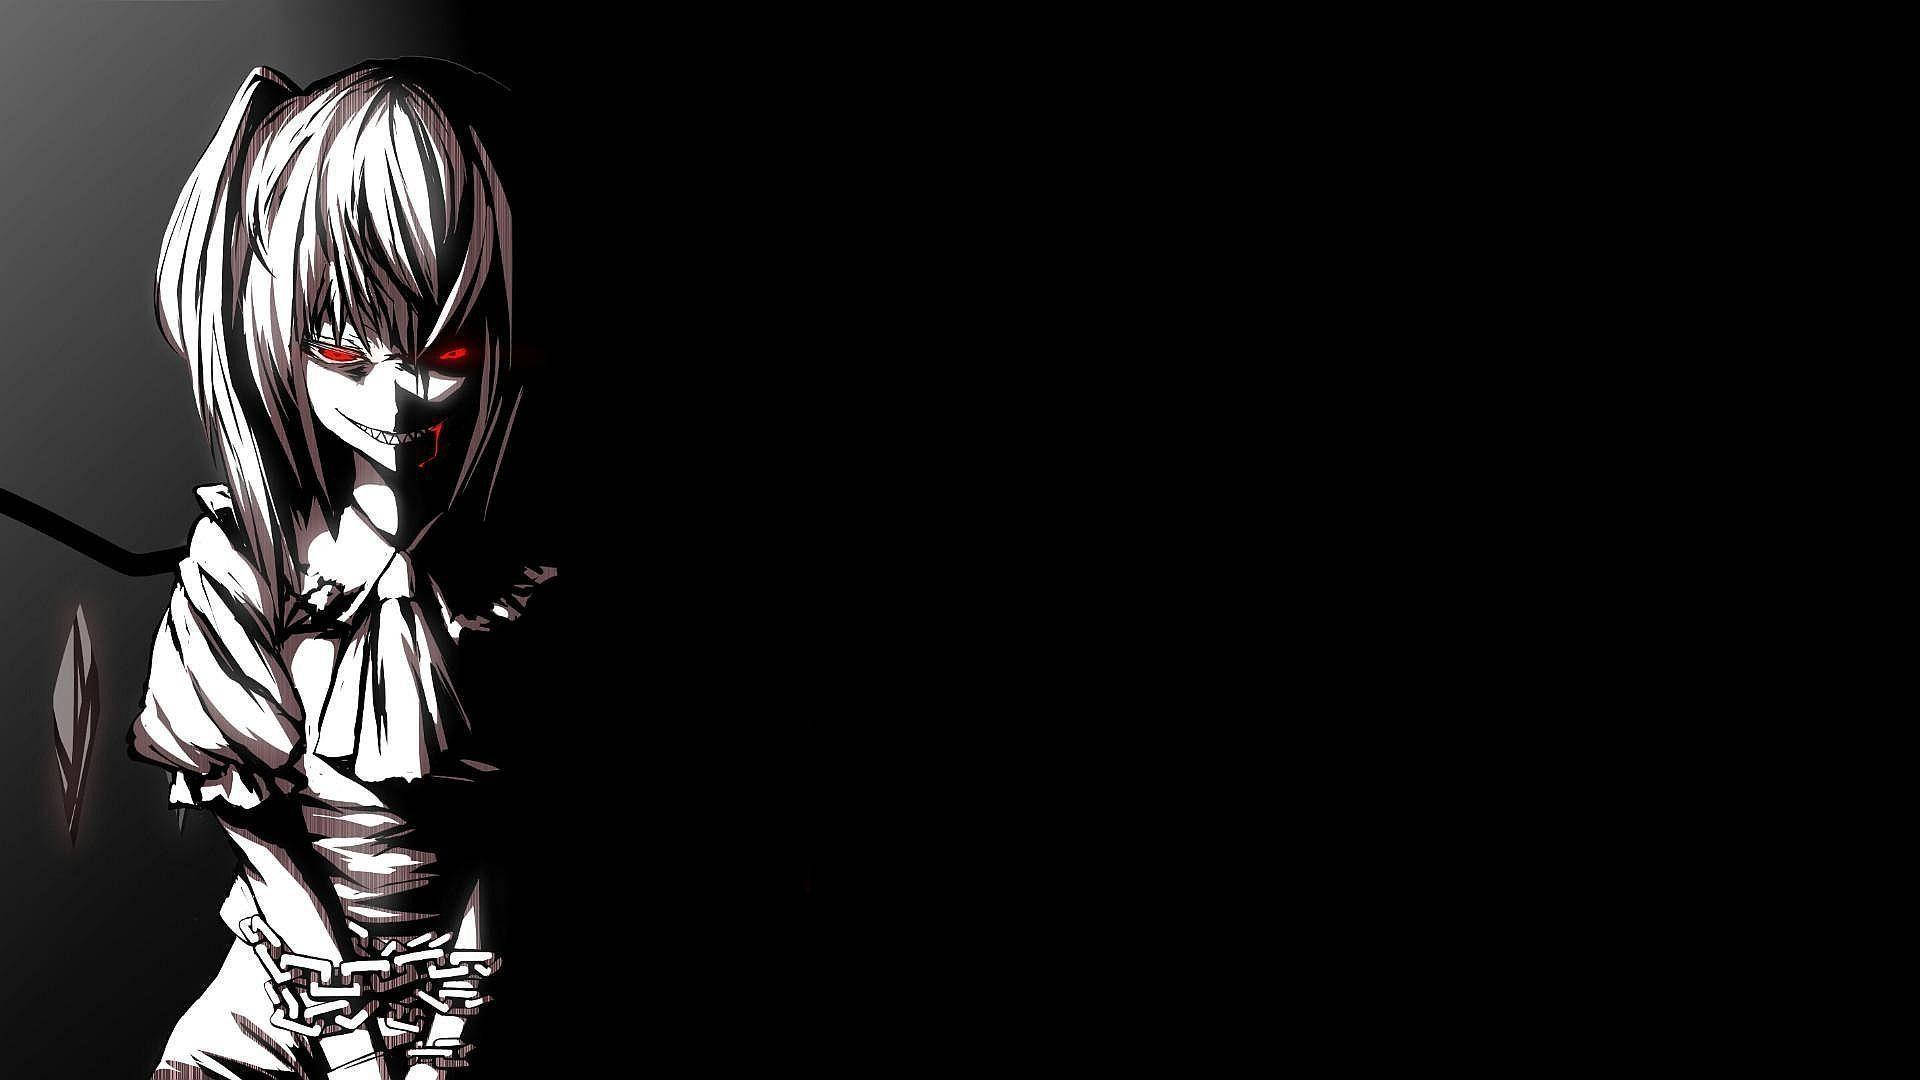 Dark Anime Chained Girl Background